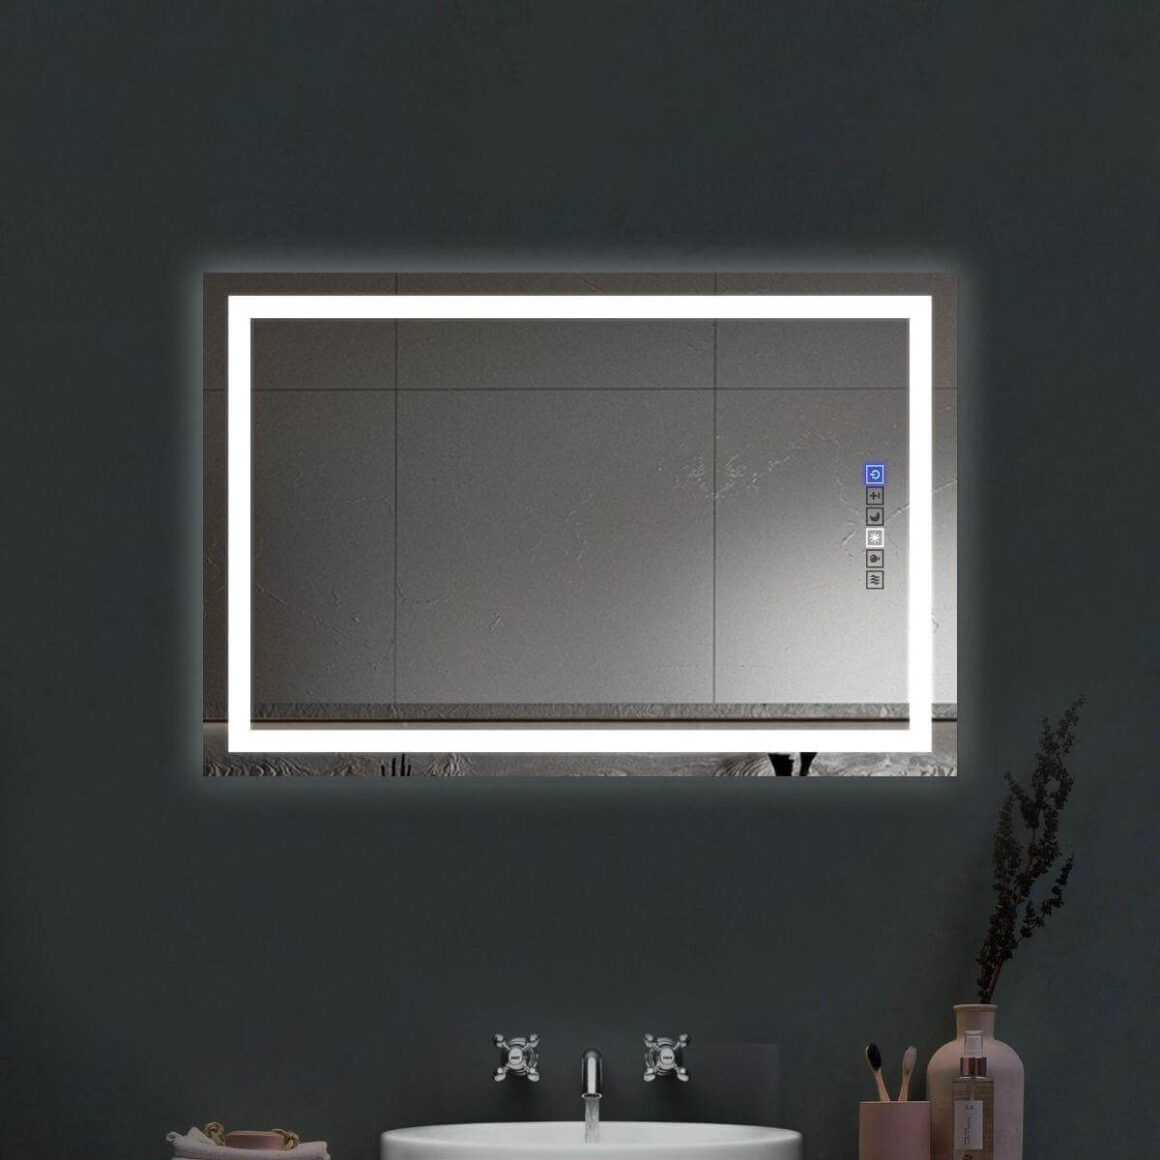 LED Mirrors Above Bathroom Sink